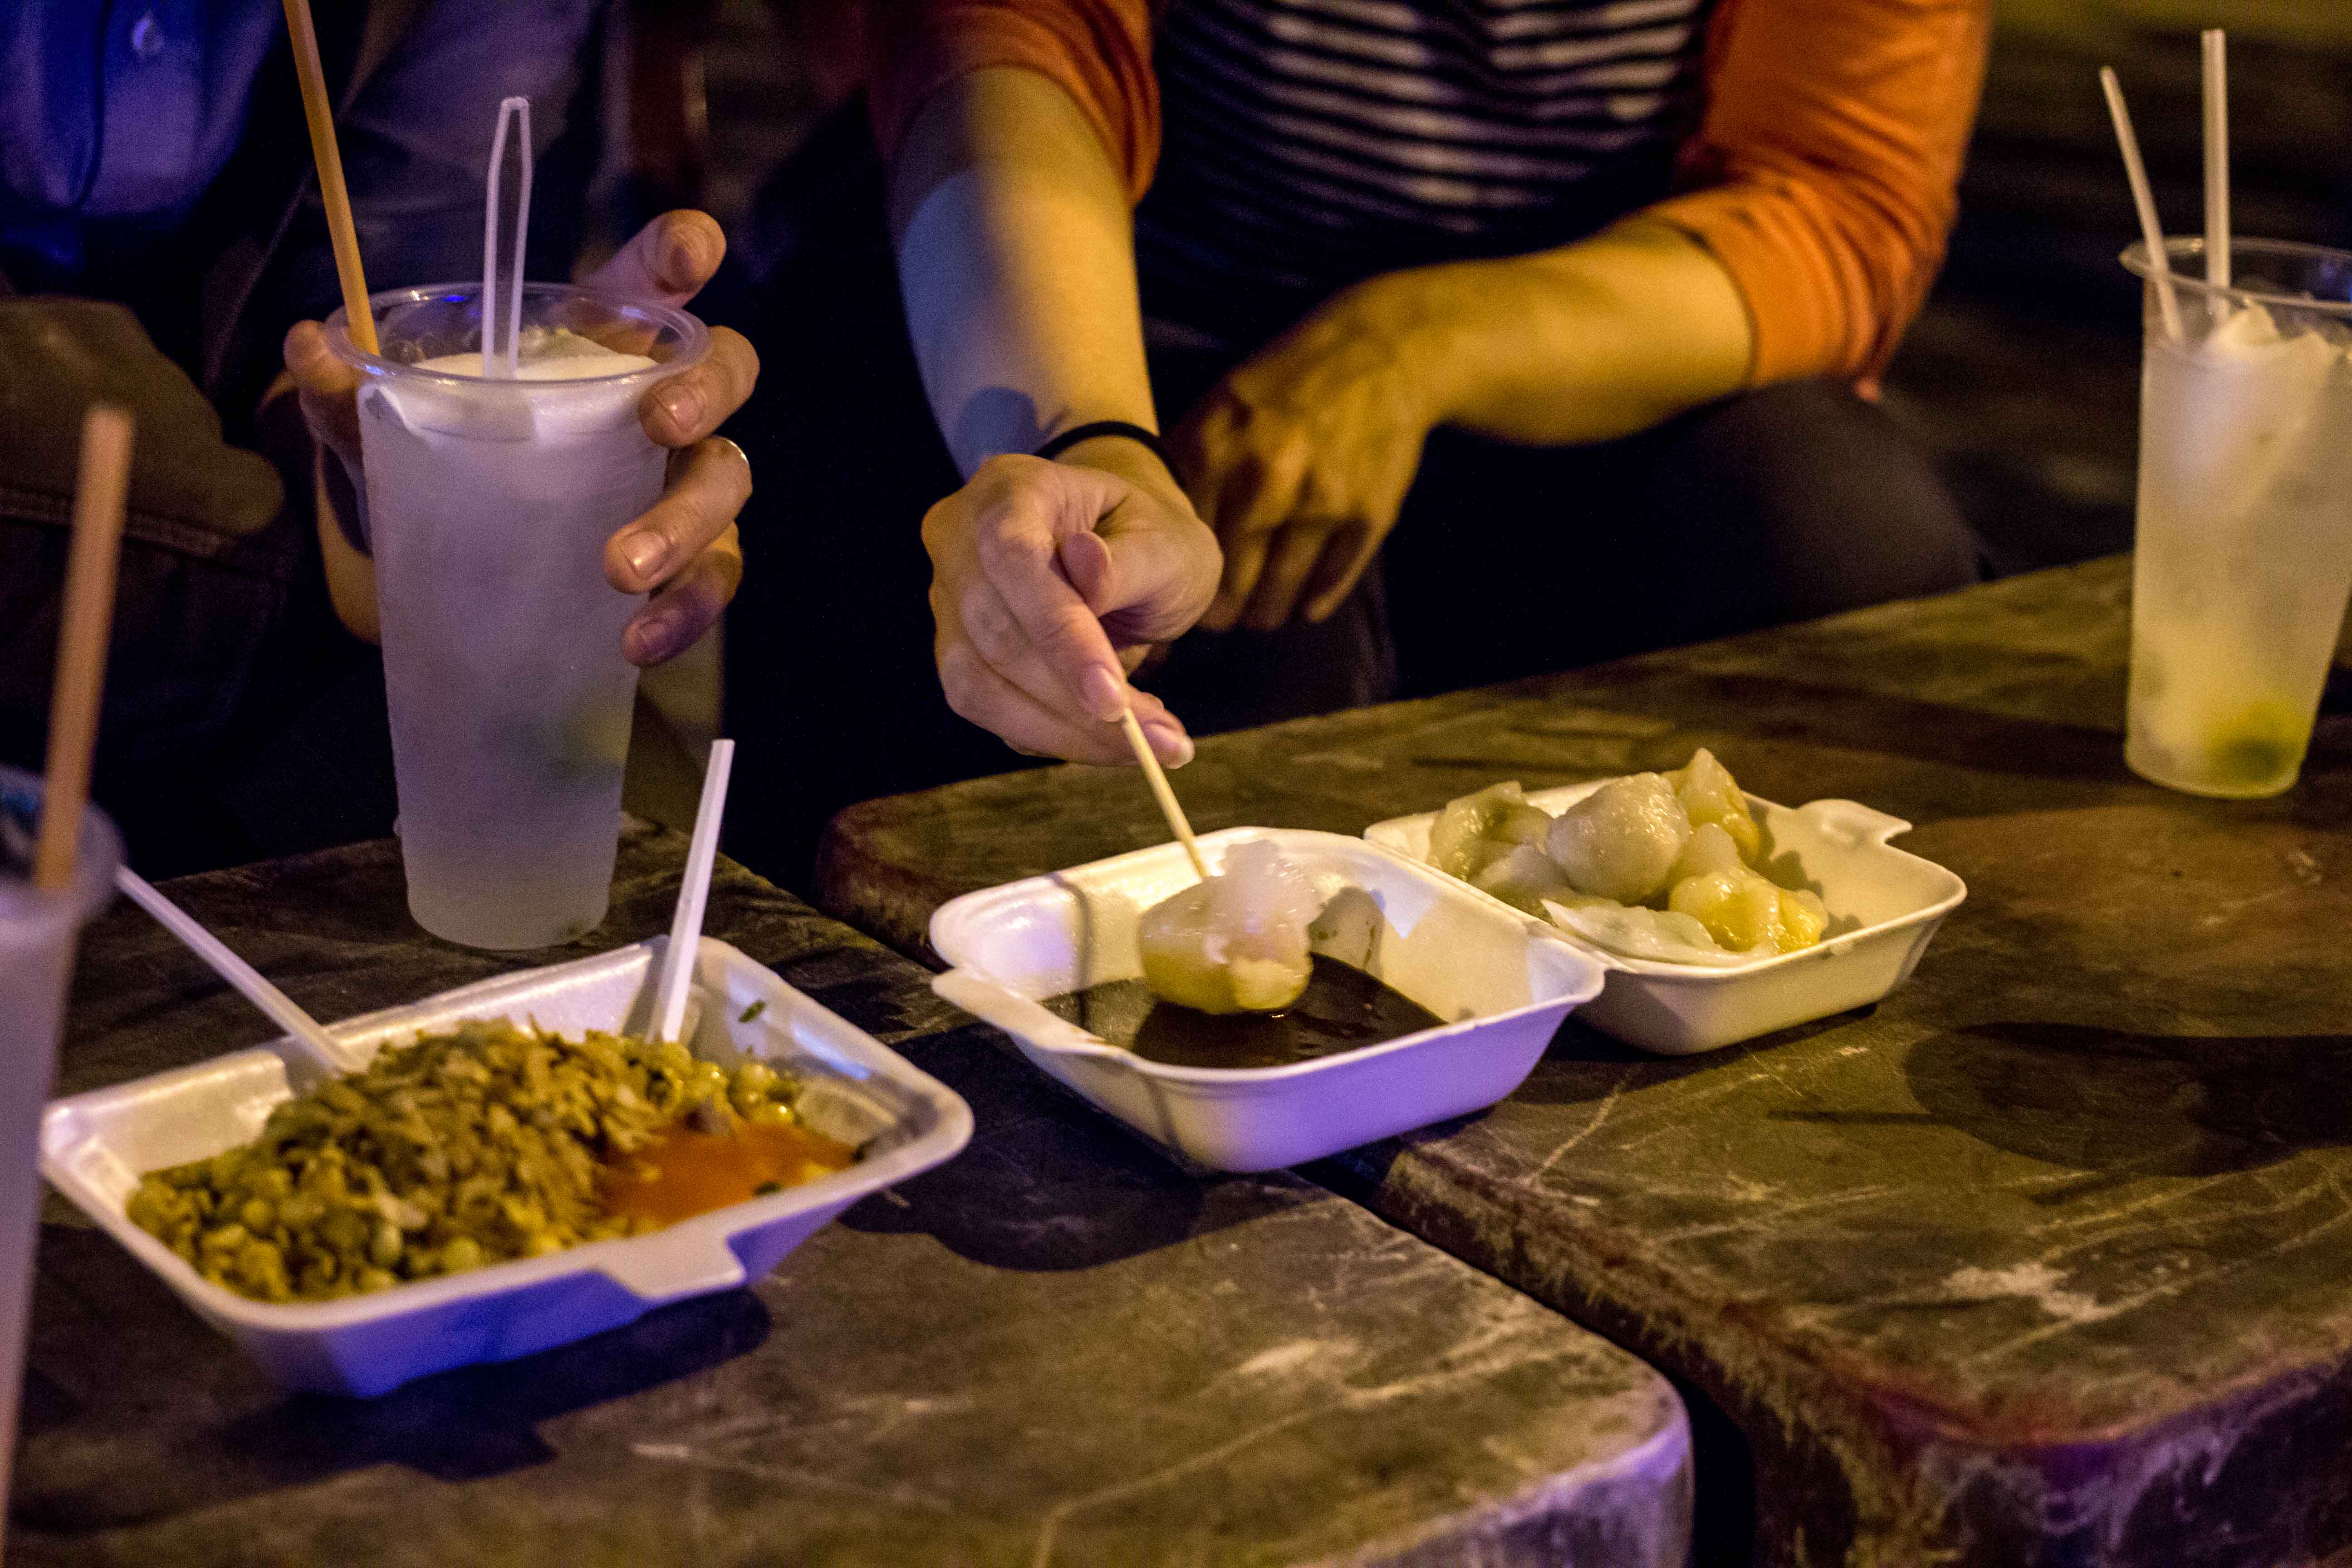 Saigon street feast and sight seeing